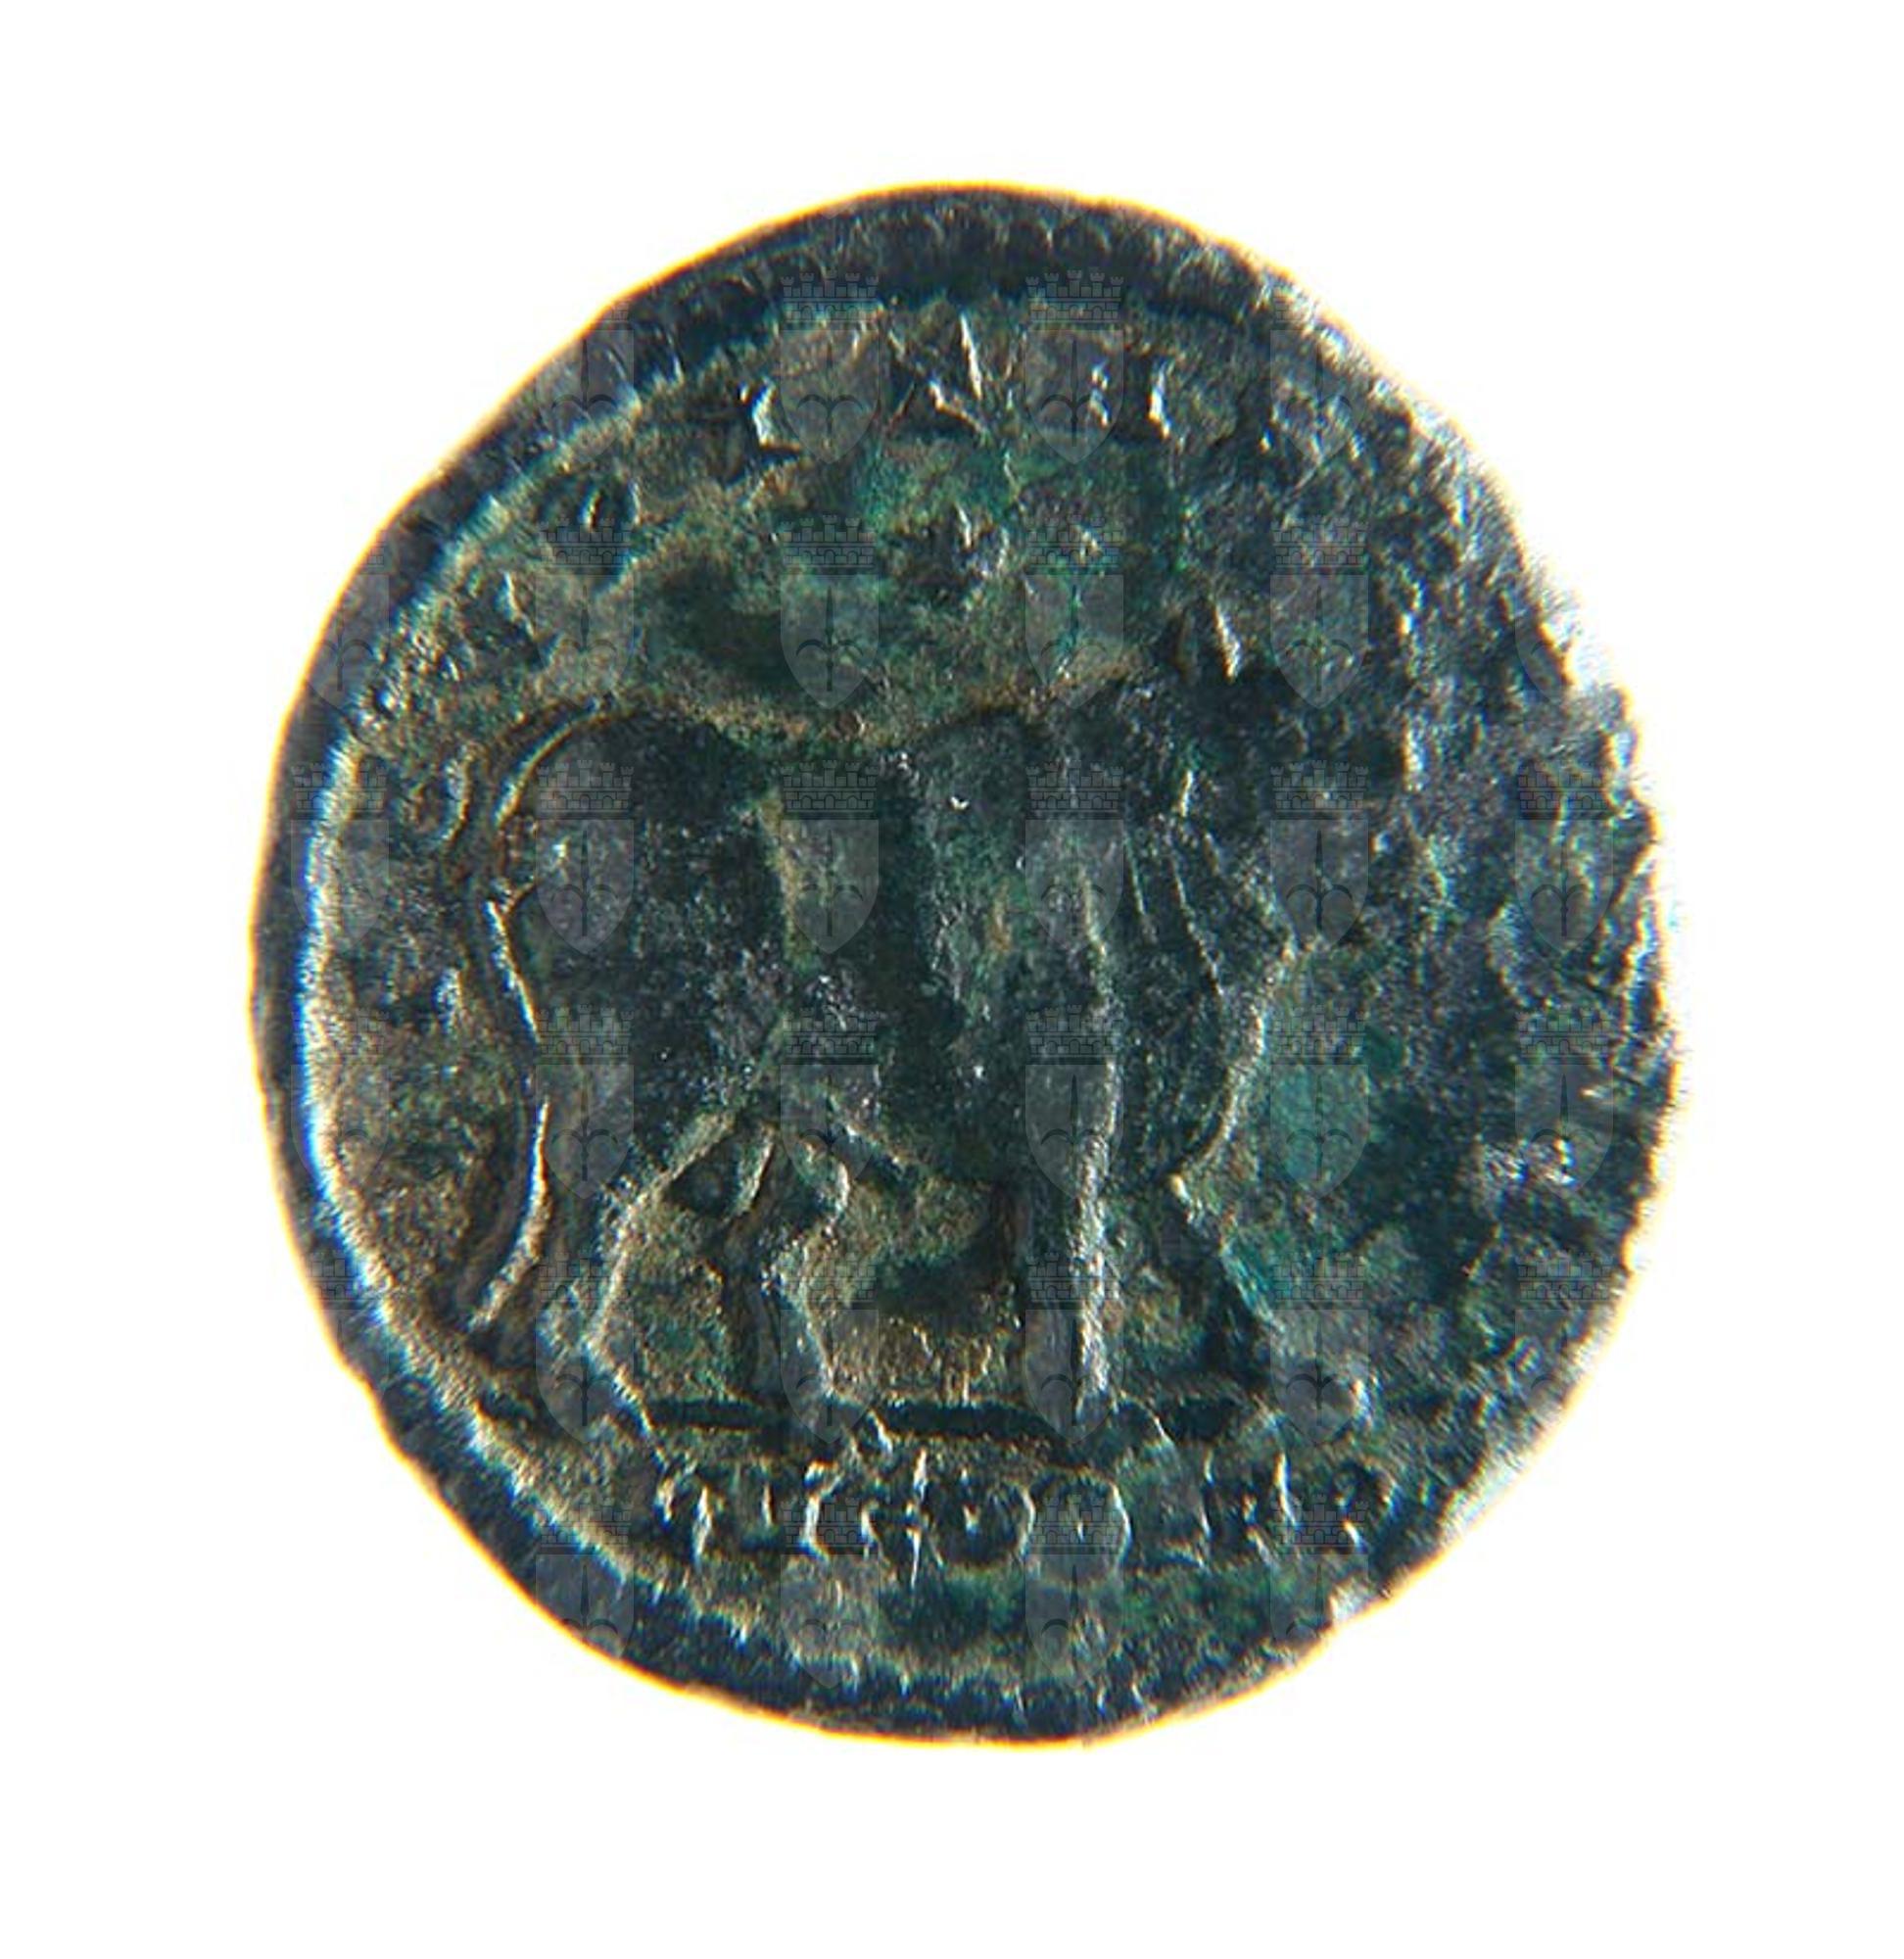 https://catalogomusei.comune.trieste.it/samira/resource/image/numismatica/CMSA_MAW_NU/CMSARA000000_Roma2870_b.JPG?token=651503b93eb22